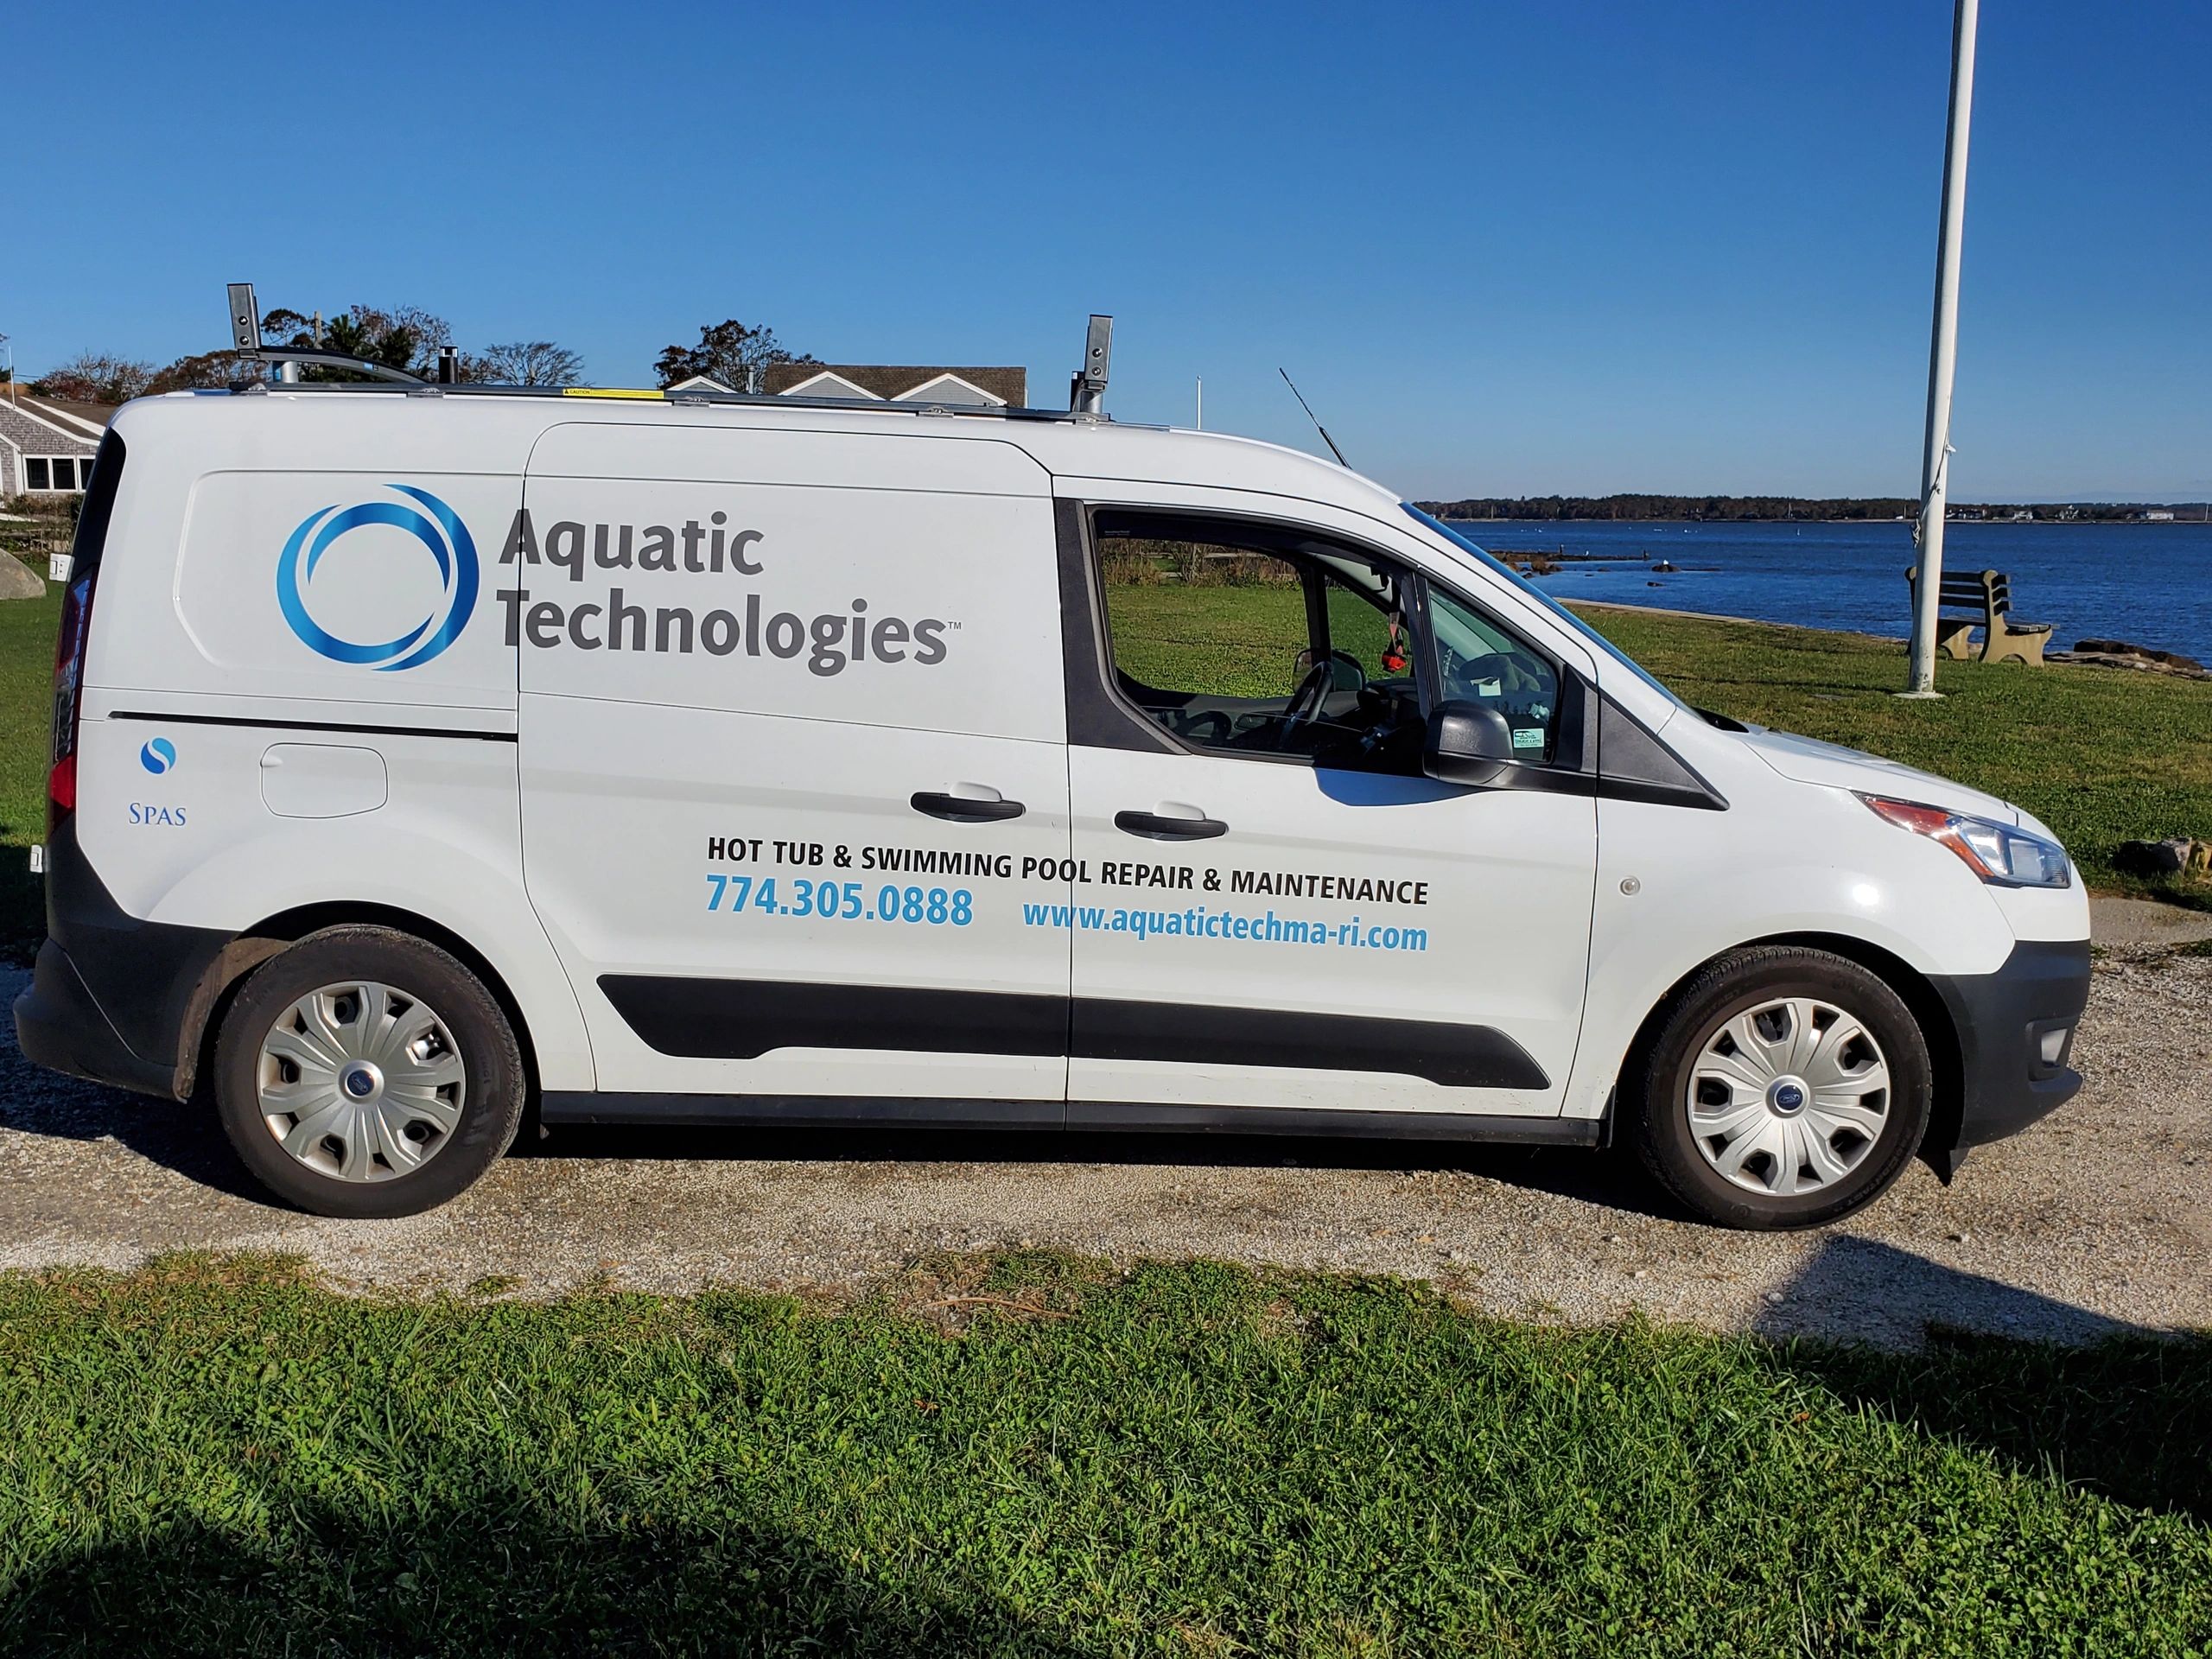 Aquatic technologies Inc service vehicle